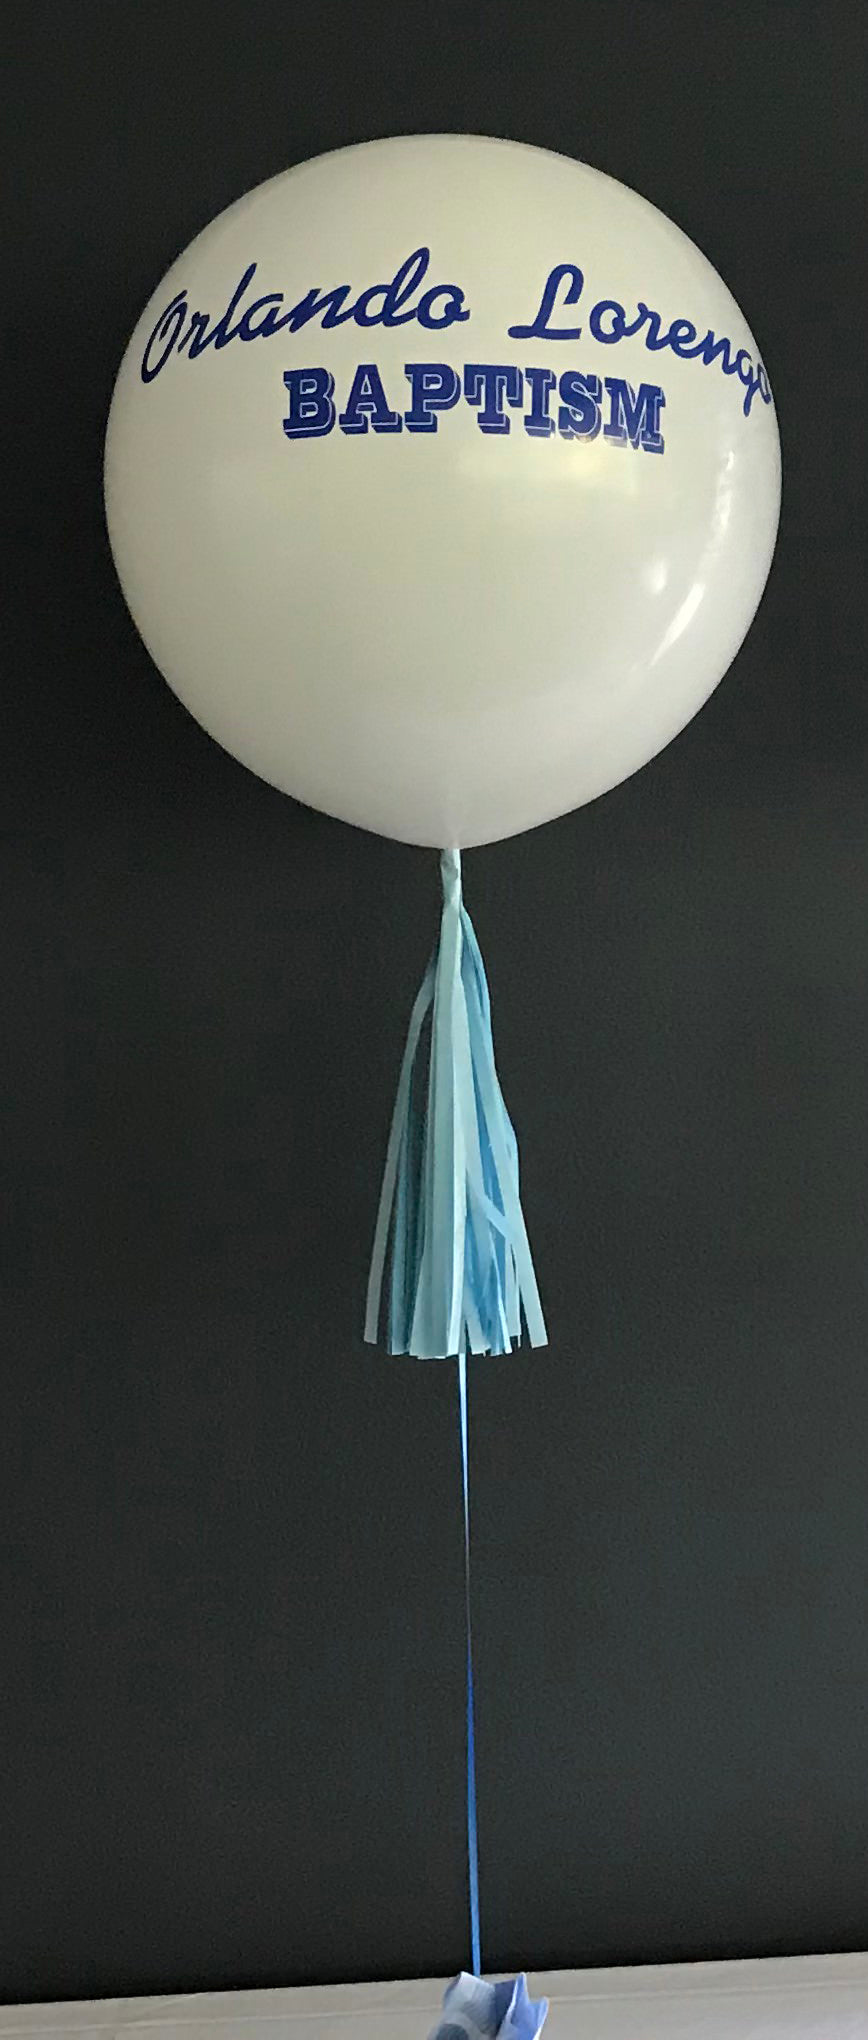 60cm Personalised Balloon